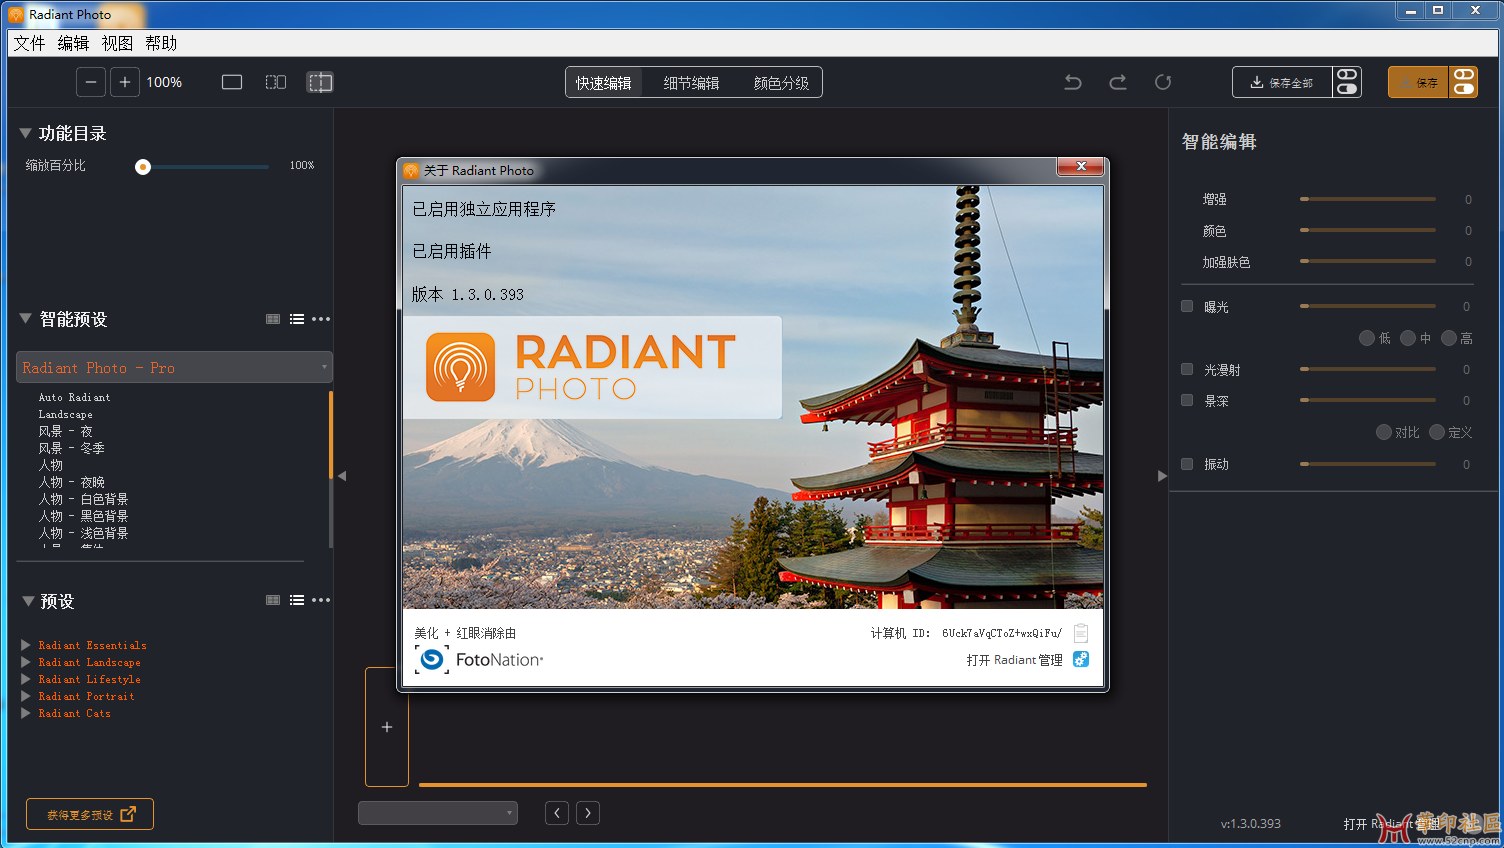 Radiant Photo v1.3.0.393 AI图像增强编辑软件{tag}(1)